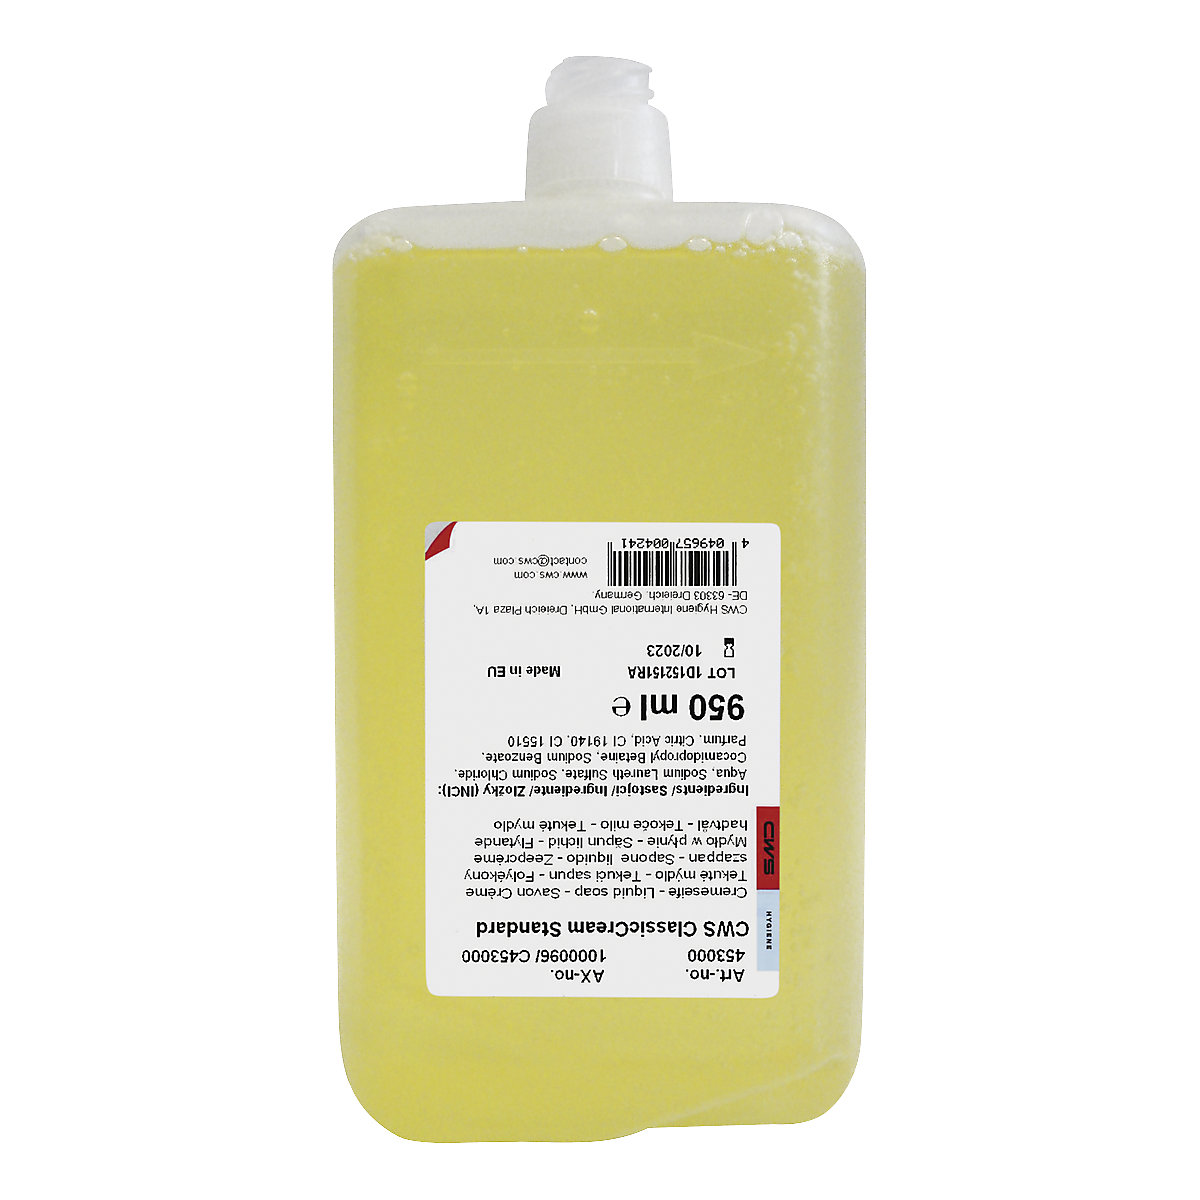 Kremasti sapun Classic Cream – CWS, pak. 12 boca po 1 l, u žutoj boji, s mirisom citrusa-3